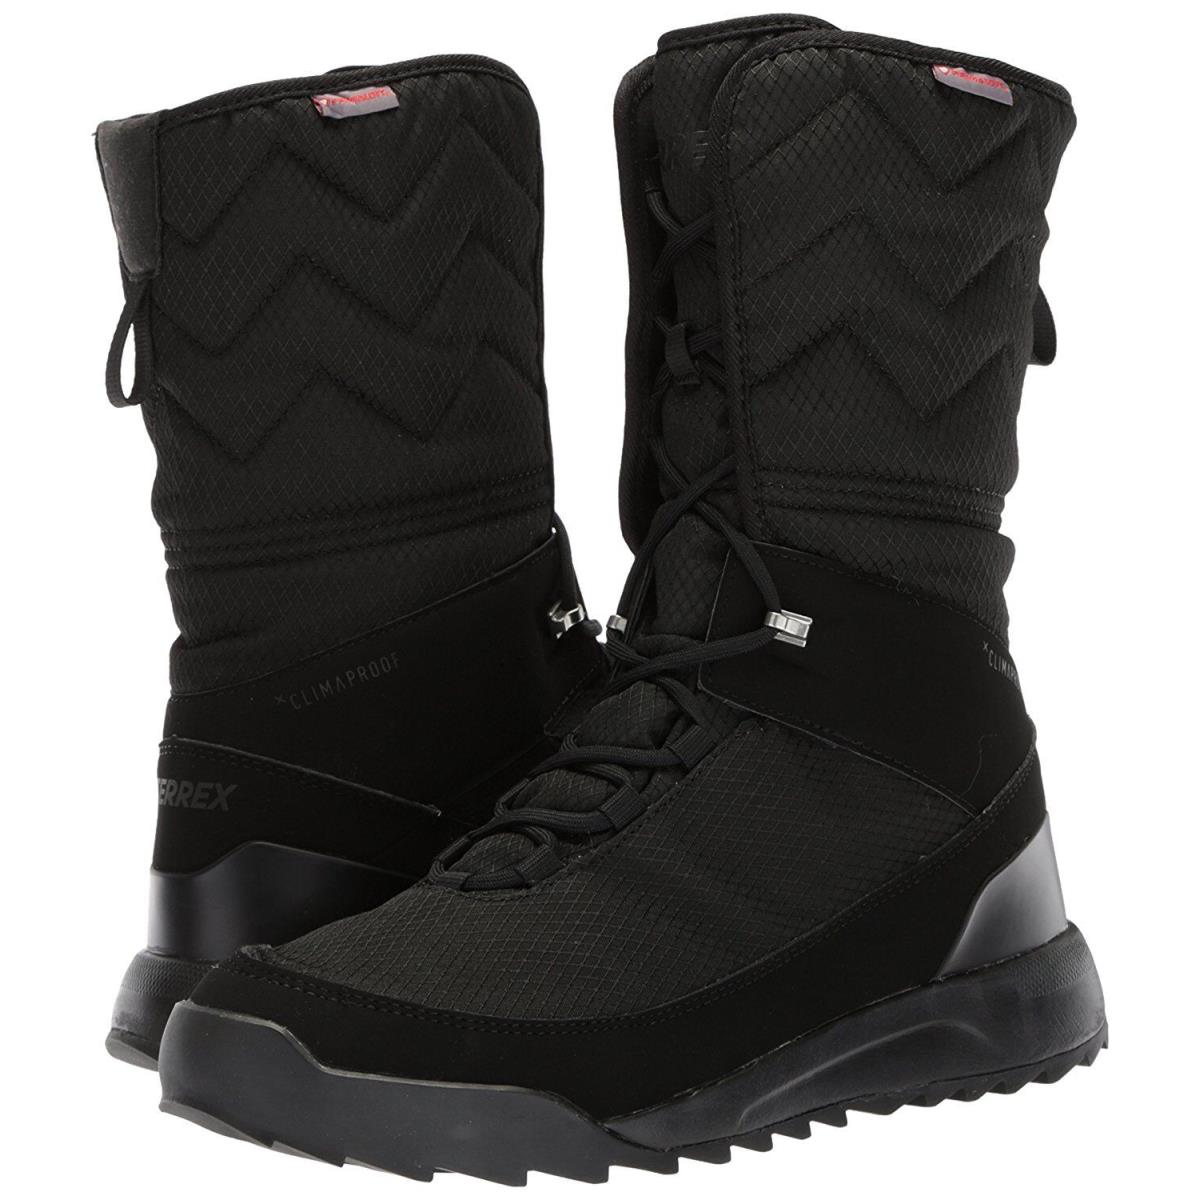 Adidas Terrex Choleah High CP Walking-shoes Womens Black Boots S80742 SZ 5